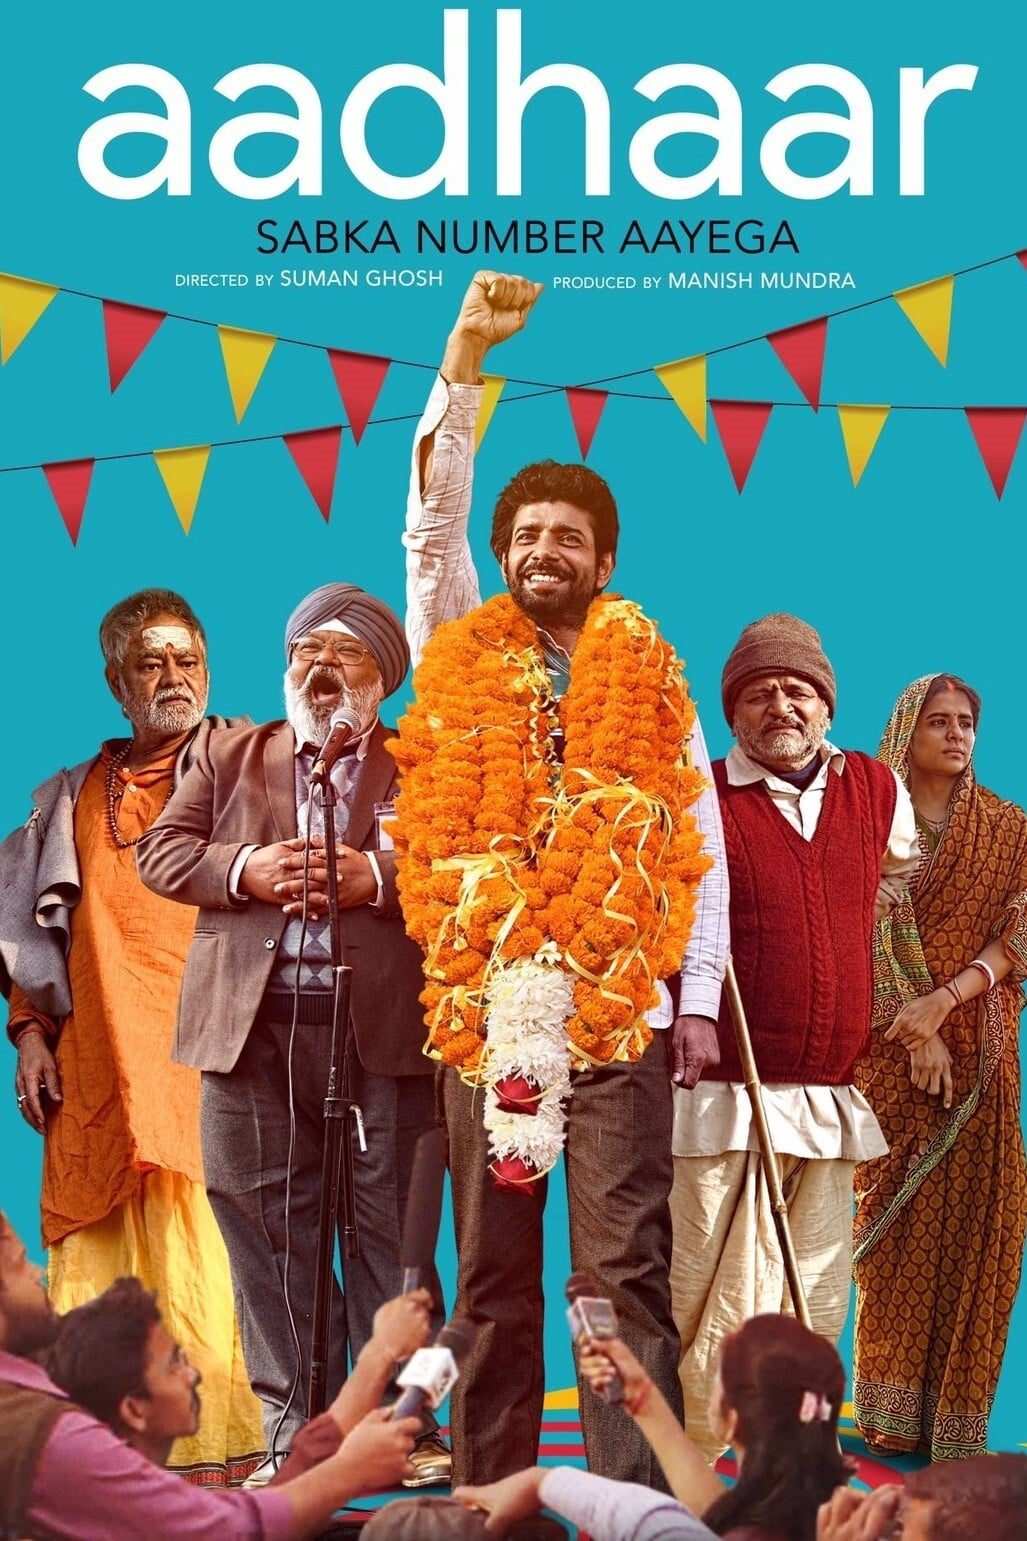 Poster for the movie "Aadhaar"